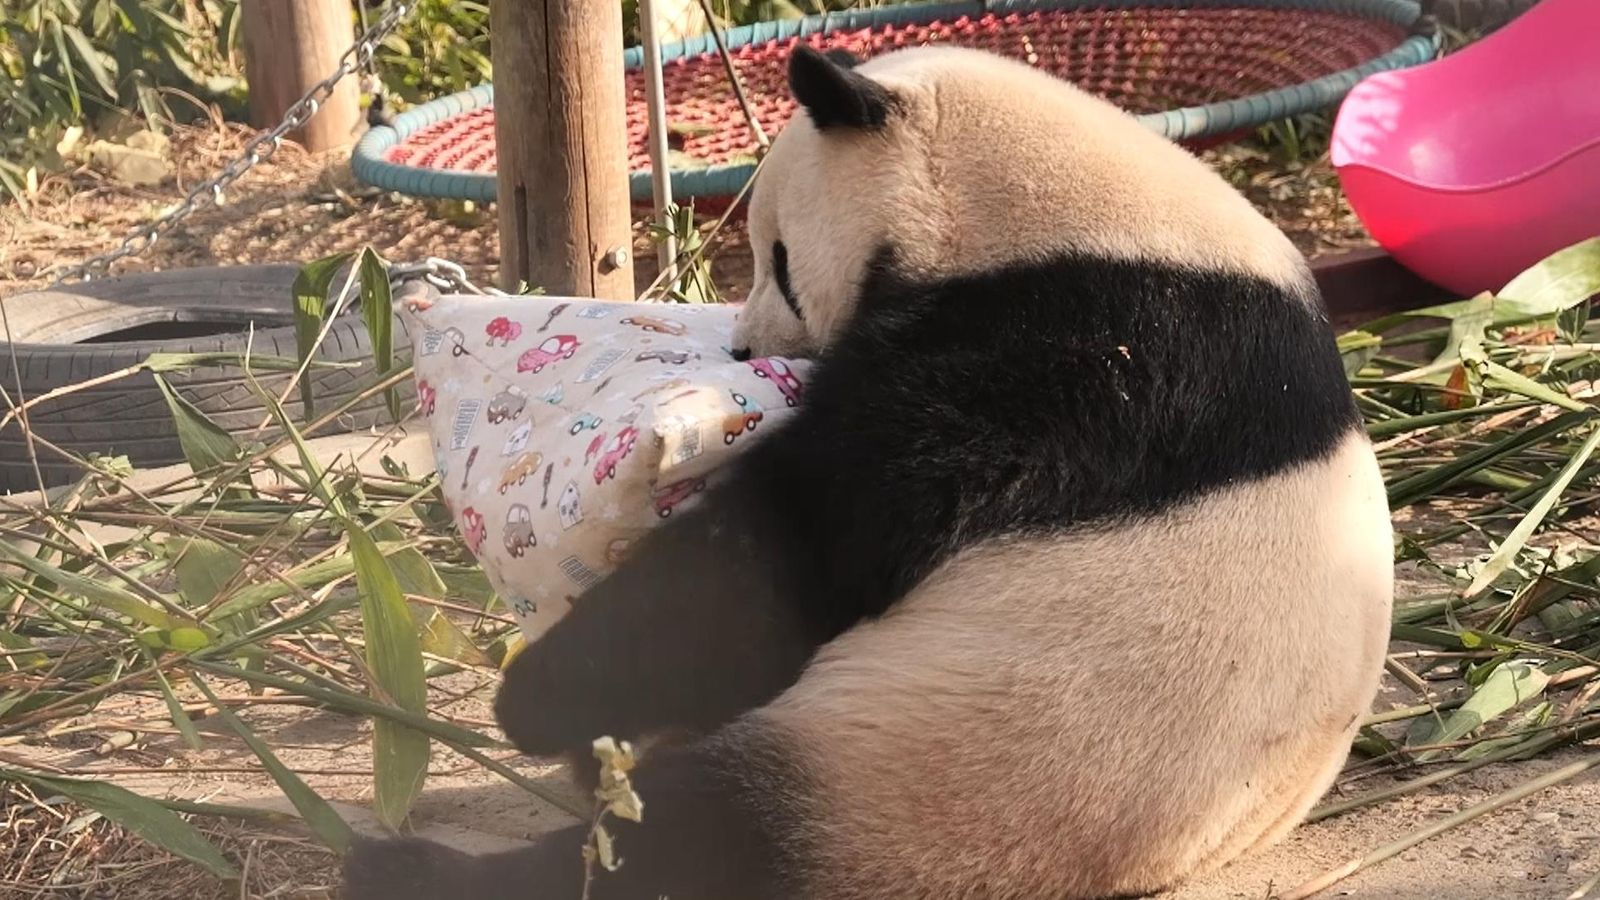 The return of a panda bear highlights battered relations between